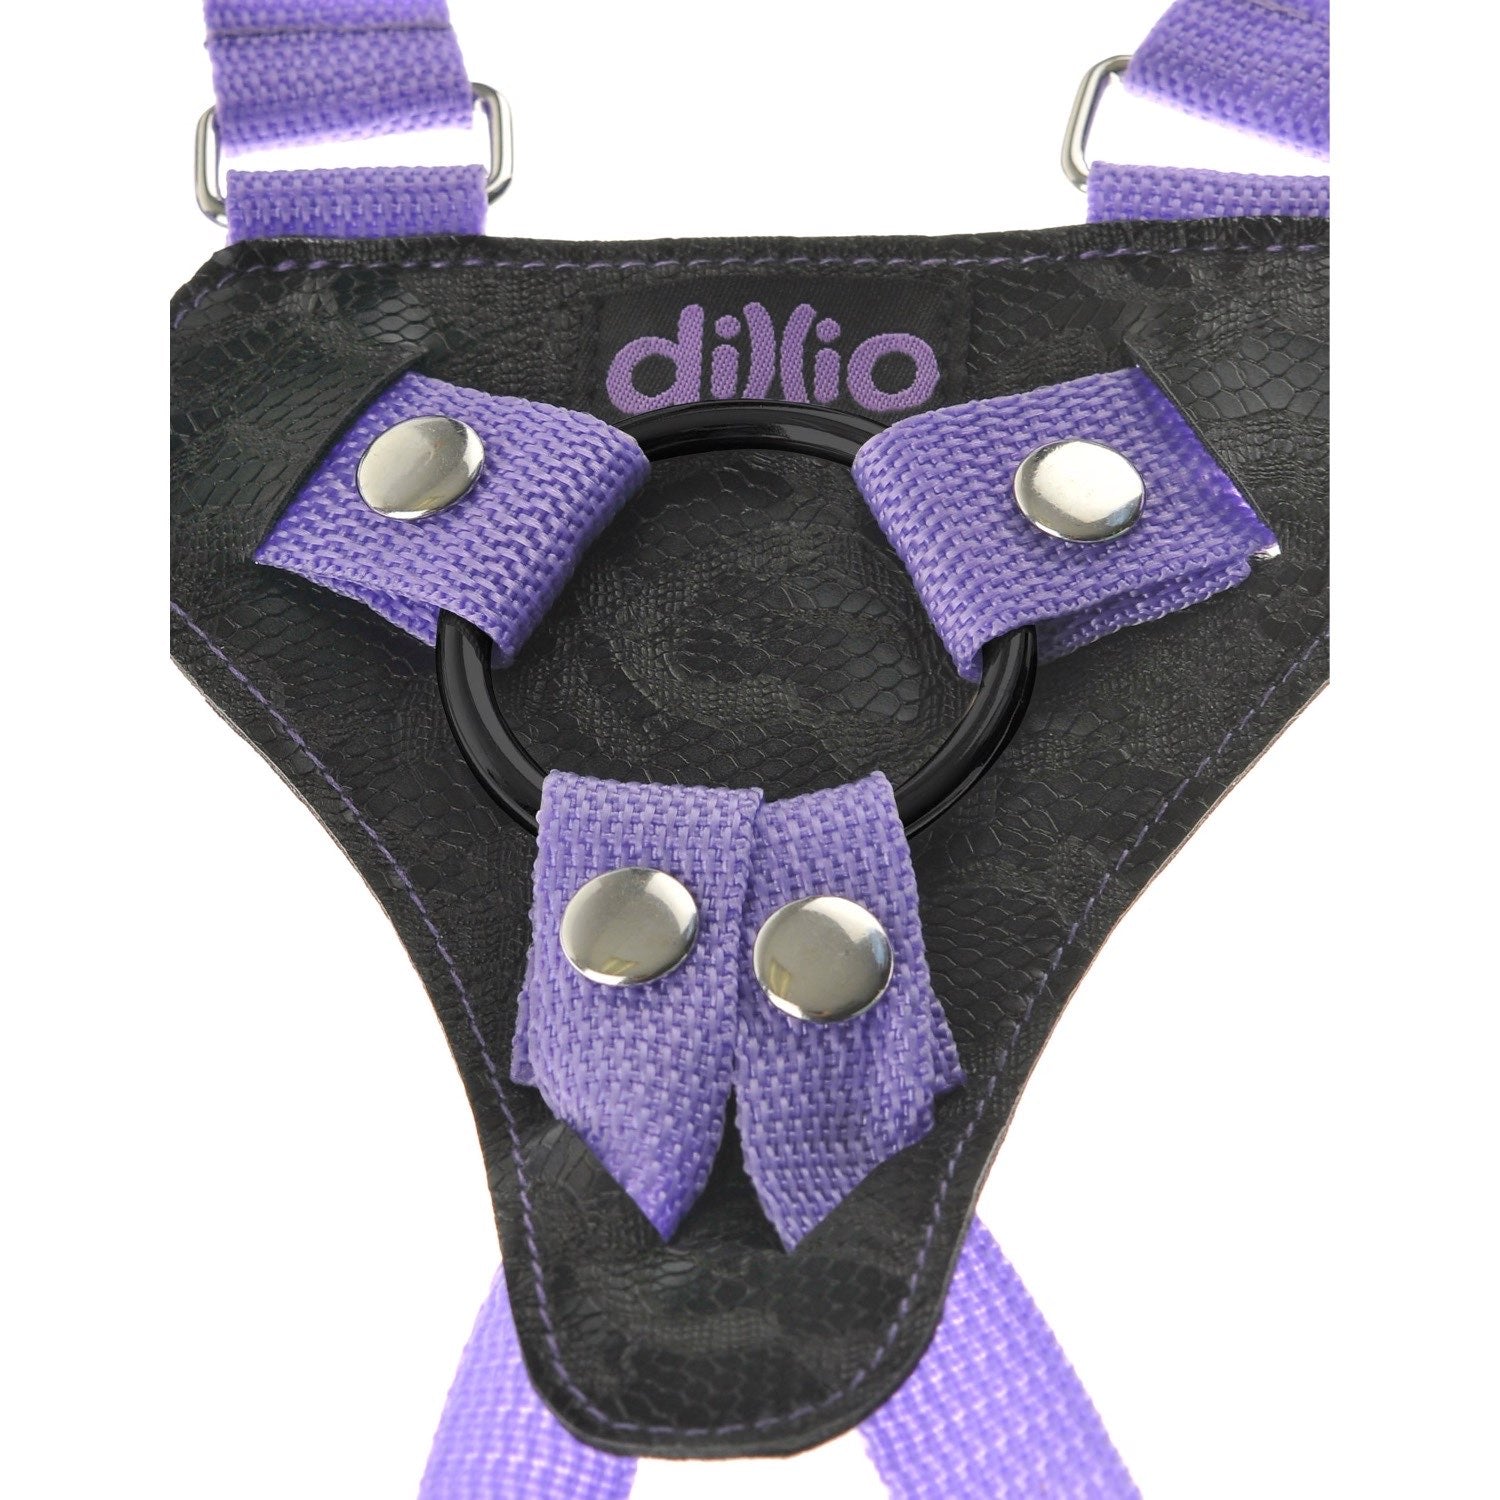 Dillio 7&quot; Strap-On Suspender Harness Set - Purple 17.8 cm Strap-On with Suspender Harness by Pipedream